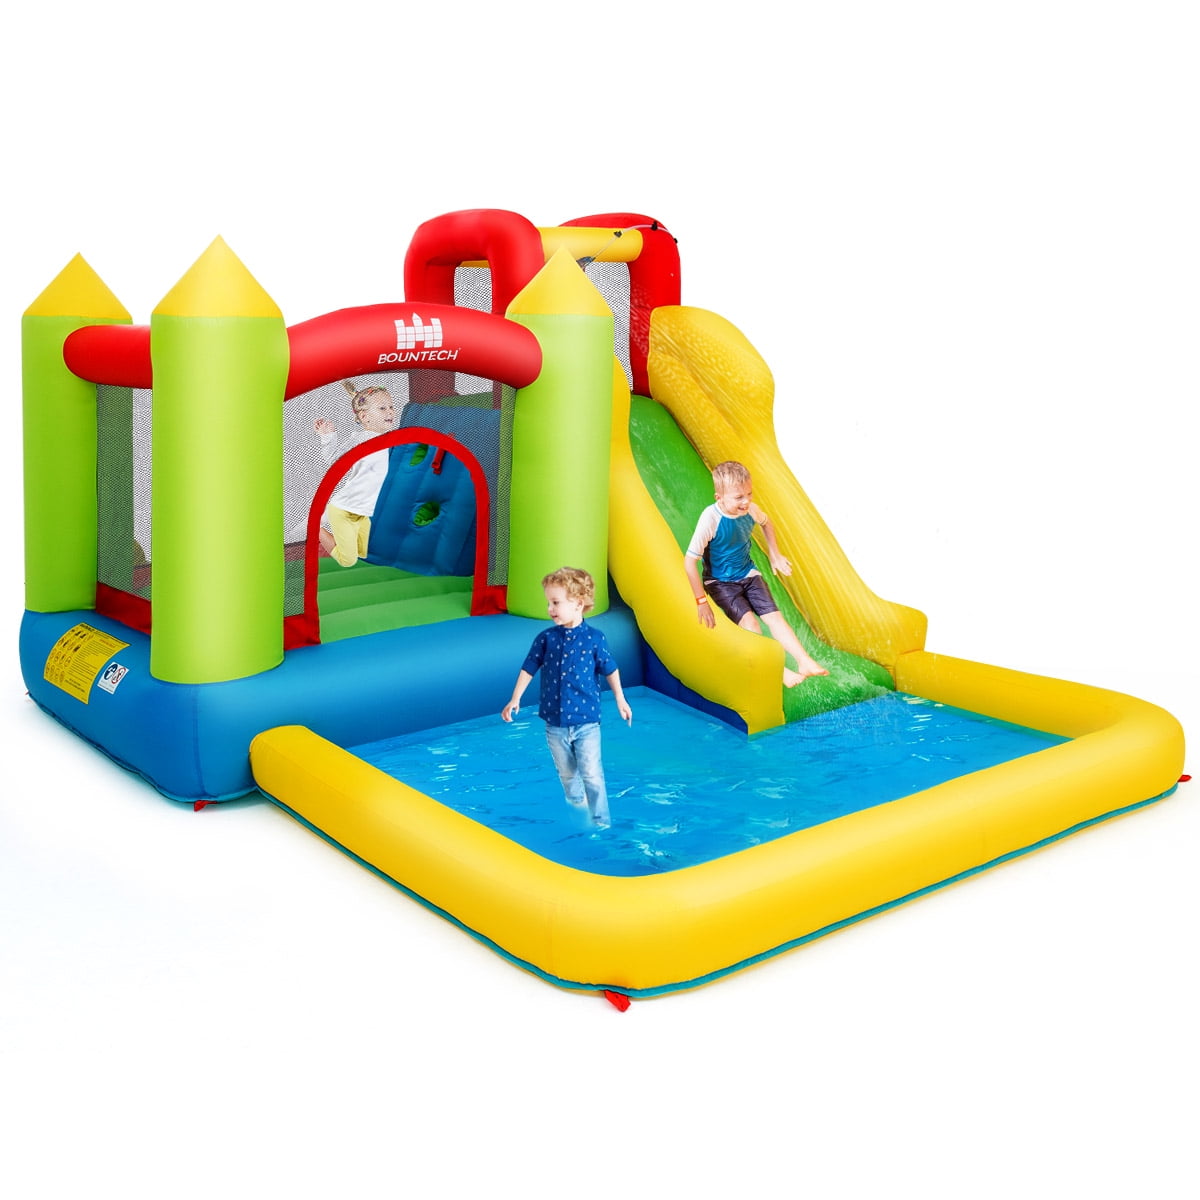 Inflatable Bounce House Water Slide Jump Bouncer W Climbing Wall And Splash Pool Walmart Com Walmart Com